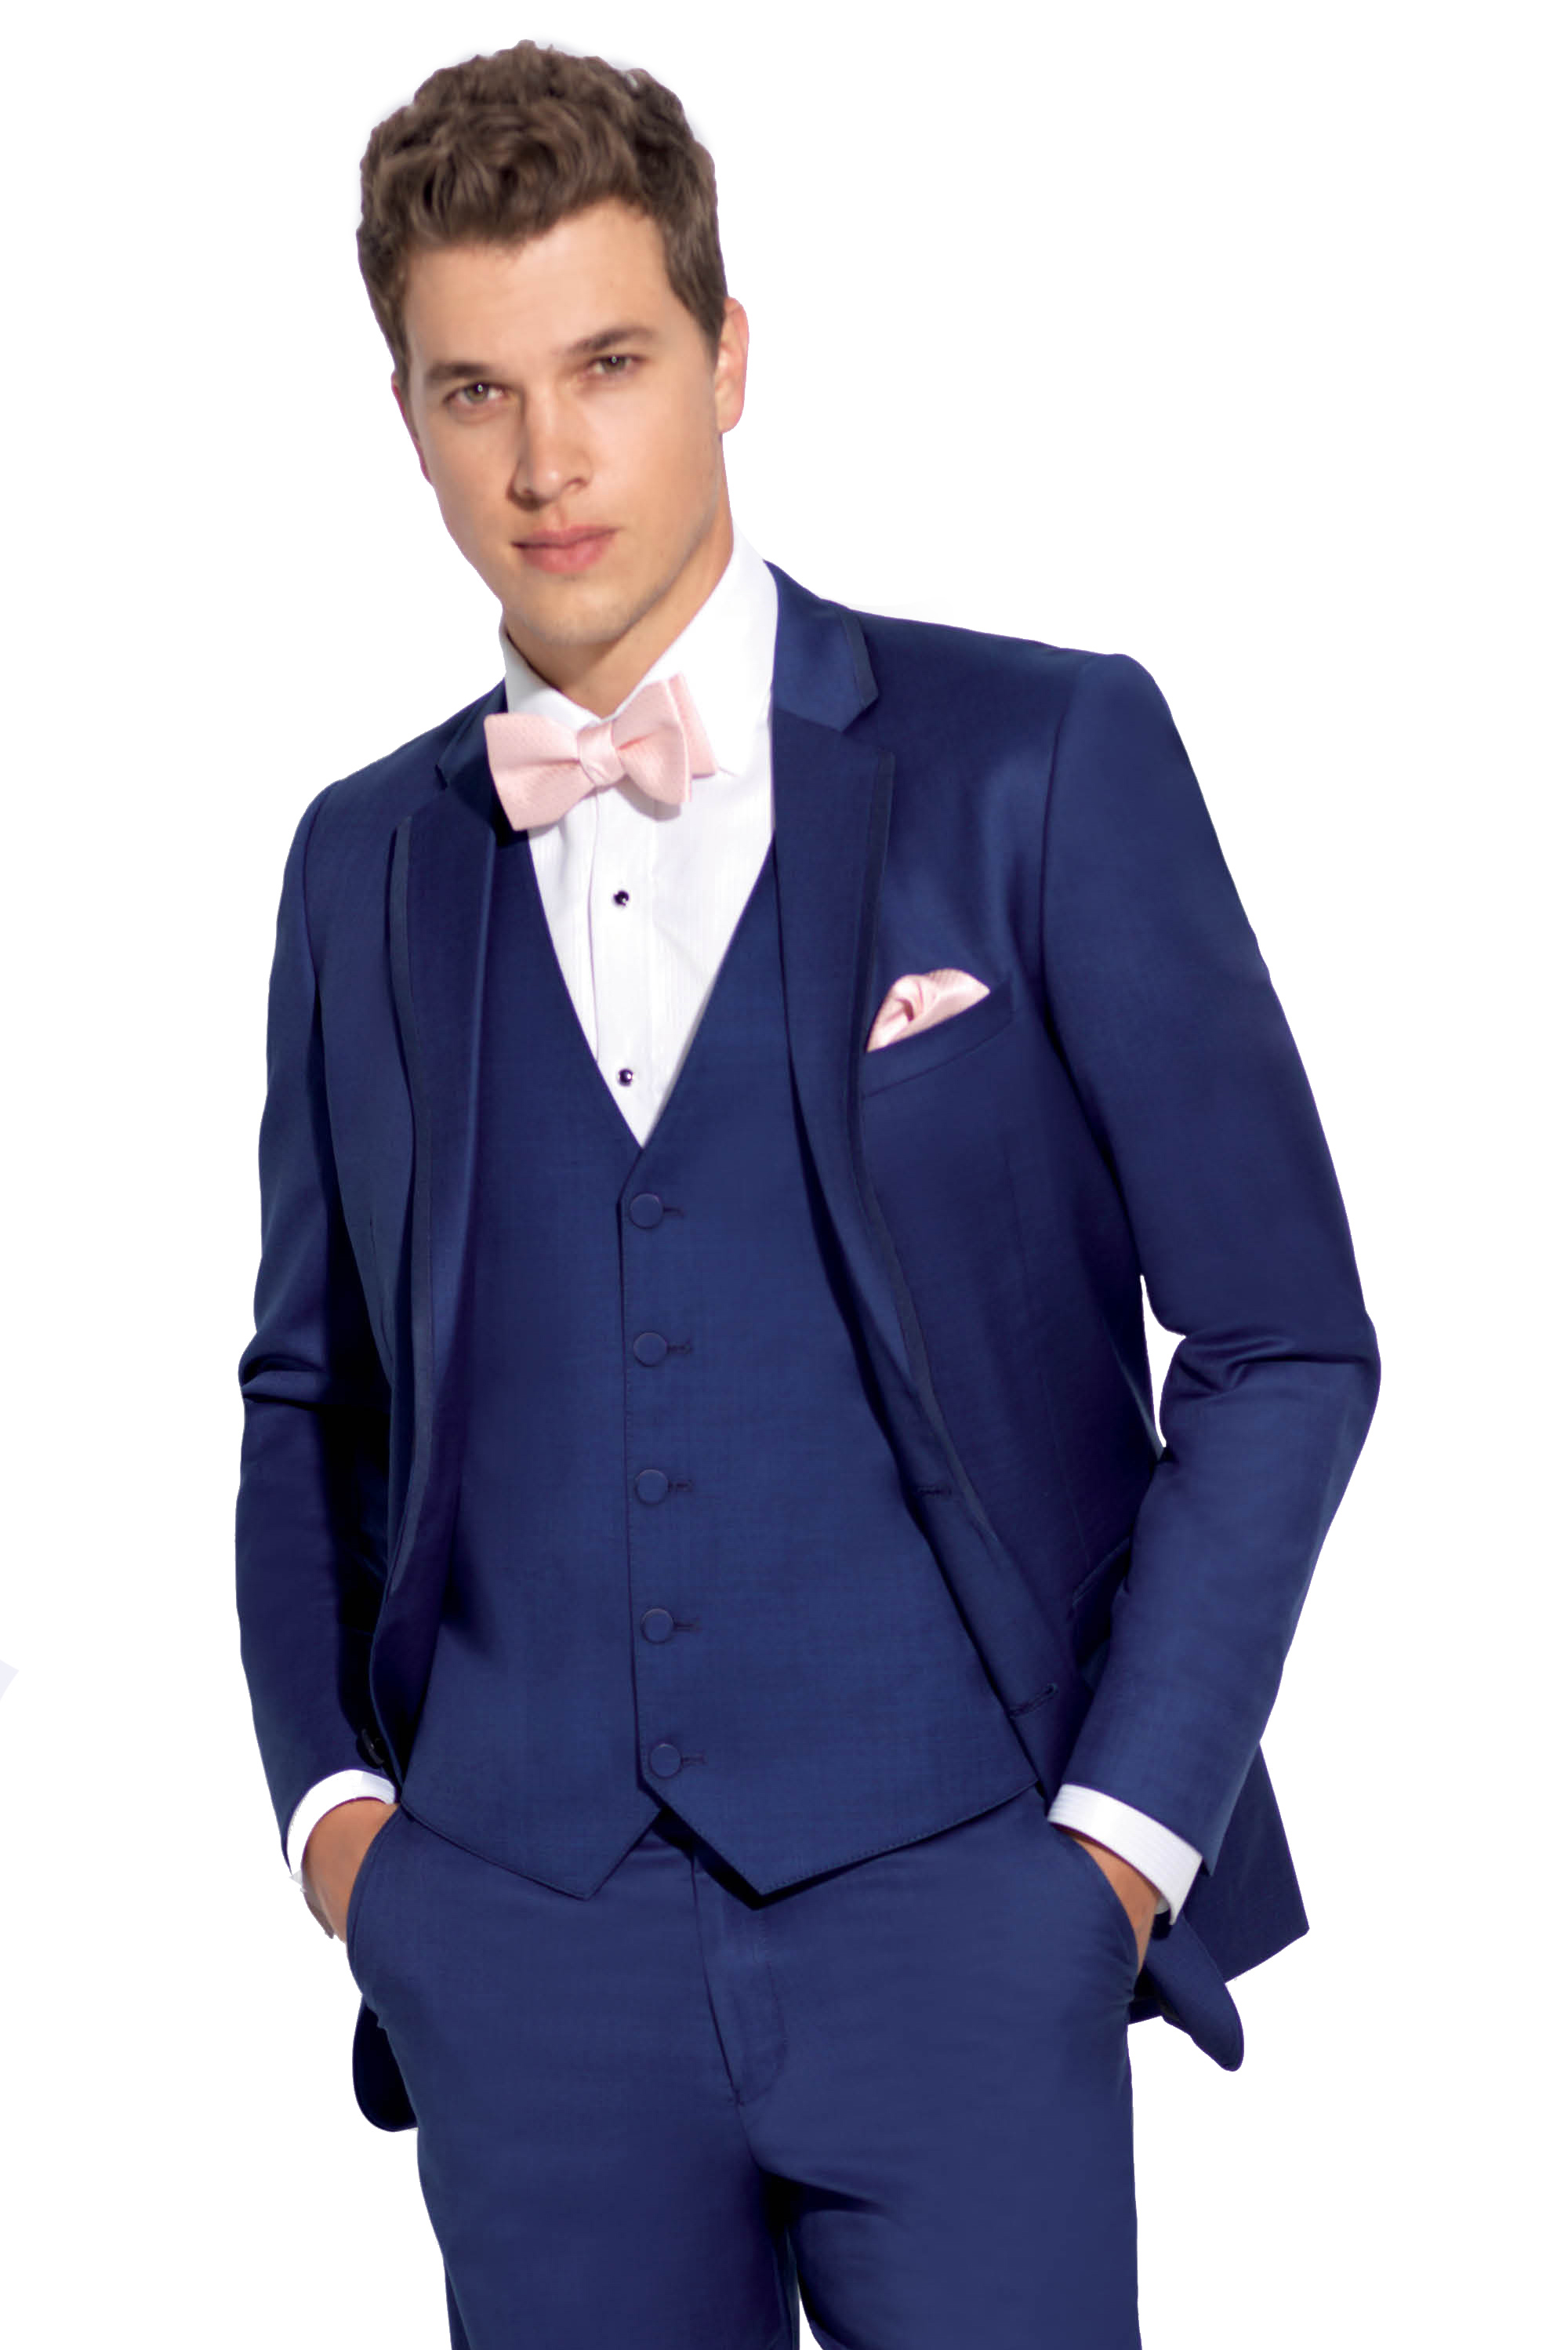 COBALT BLUE FORMAL SUIT - Classy Formal Wear